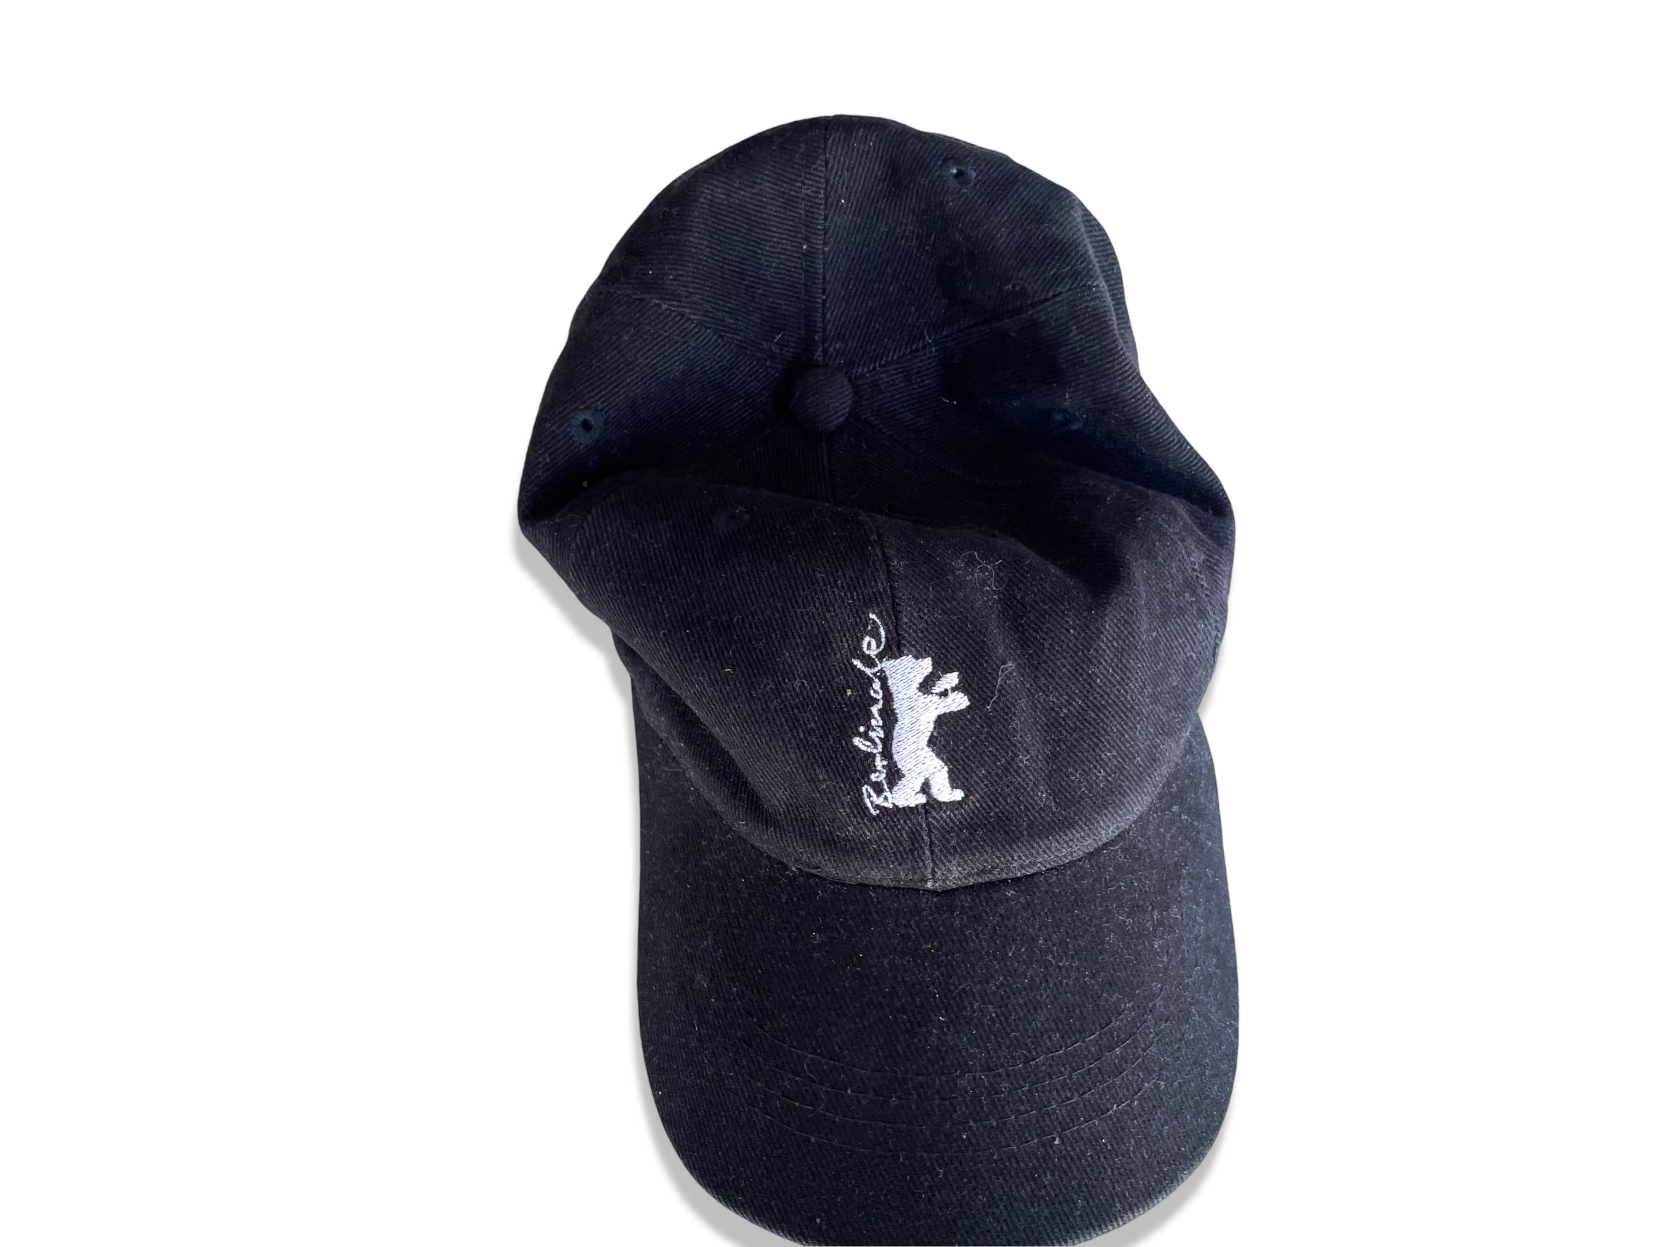 Vintage Berlinda elephant cub crest black baseball cap|SKU 4360